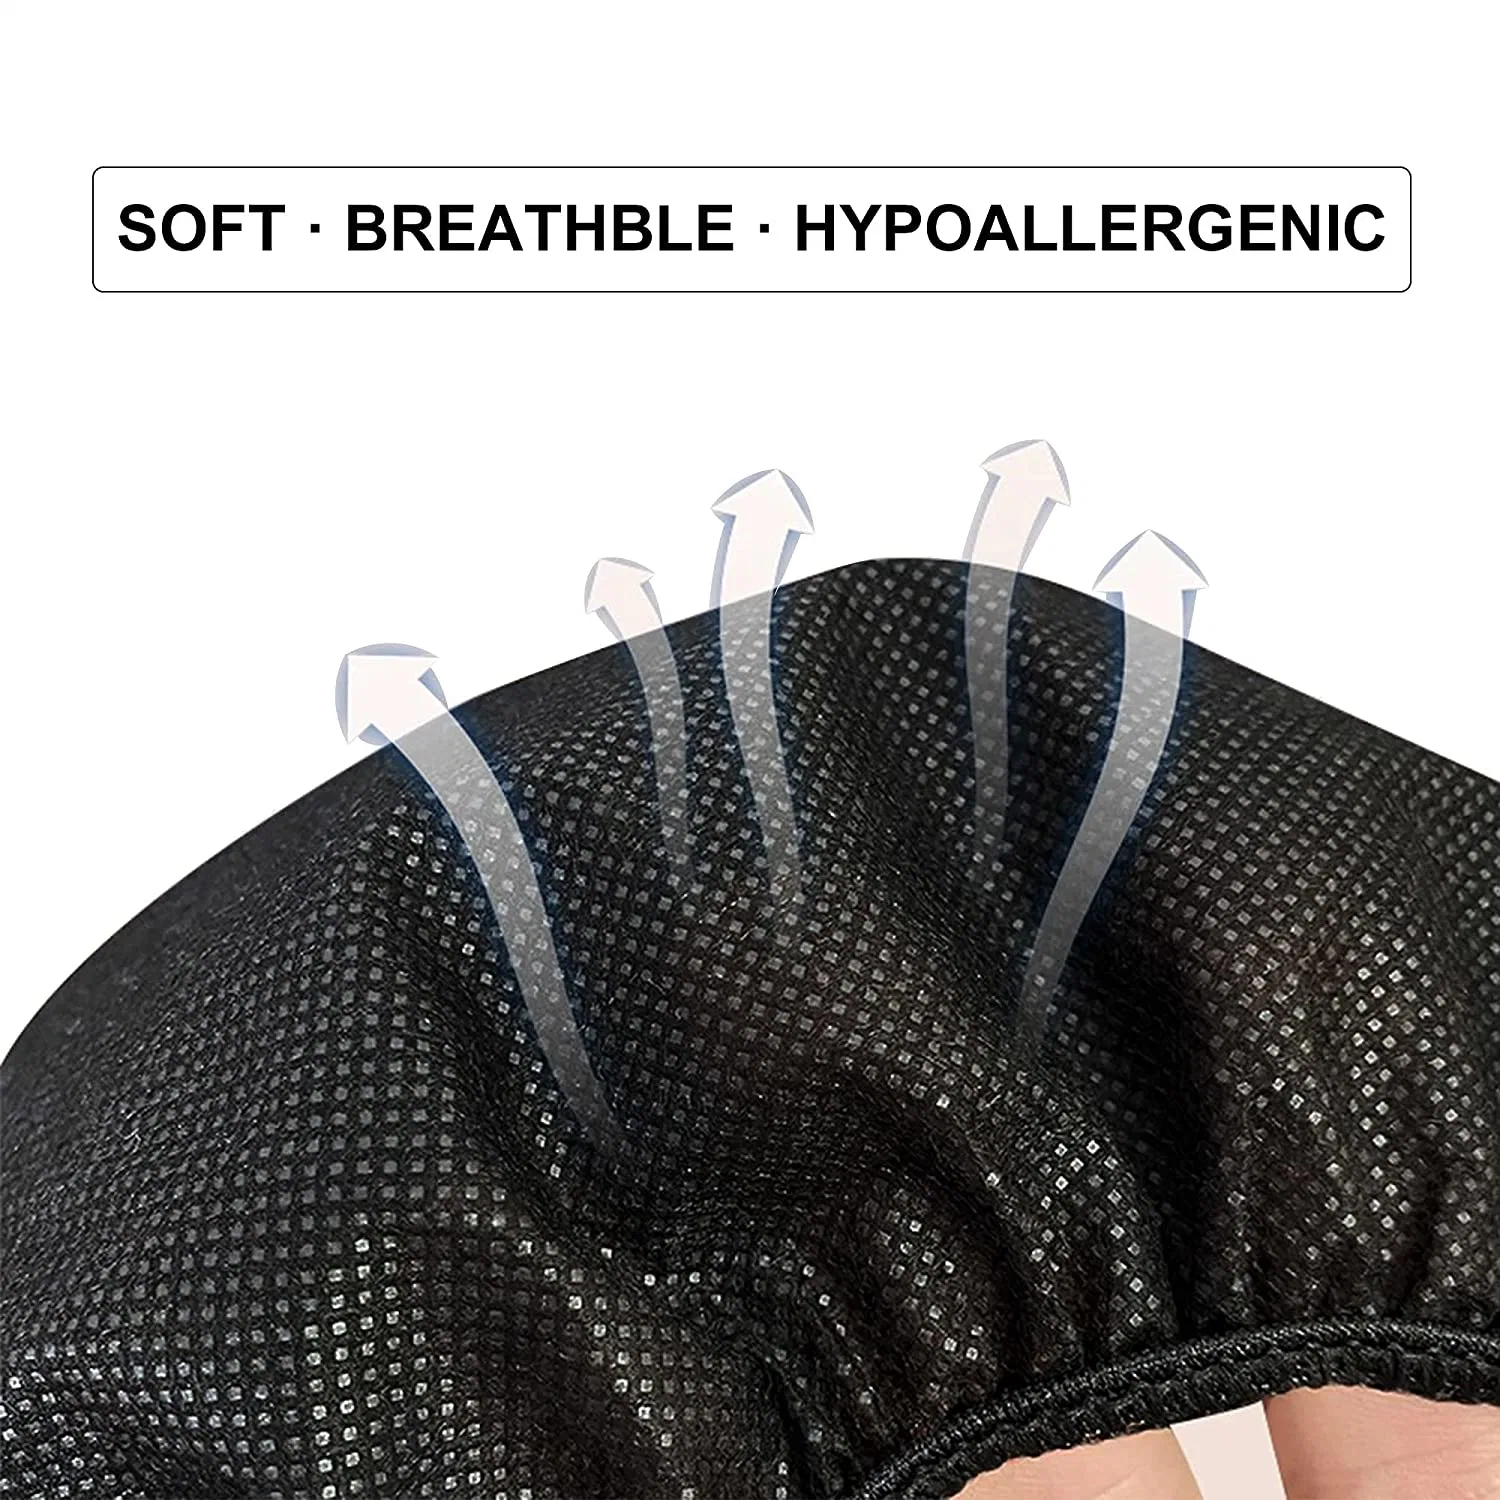 Non Woven Fabric Women SPA Disposable Underwear Brafor Salon Hospital